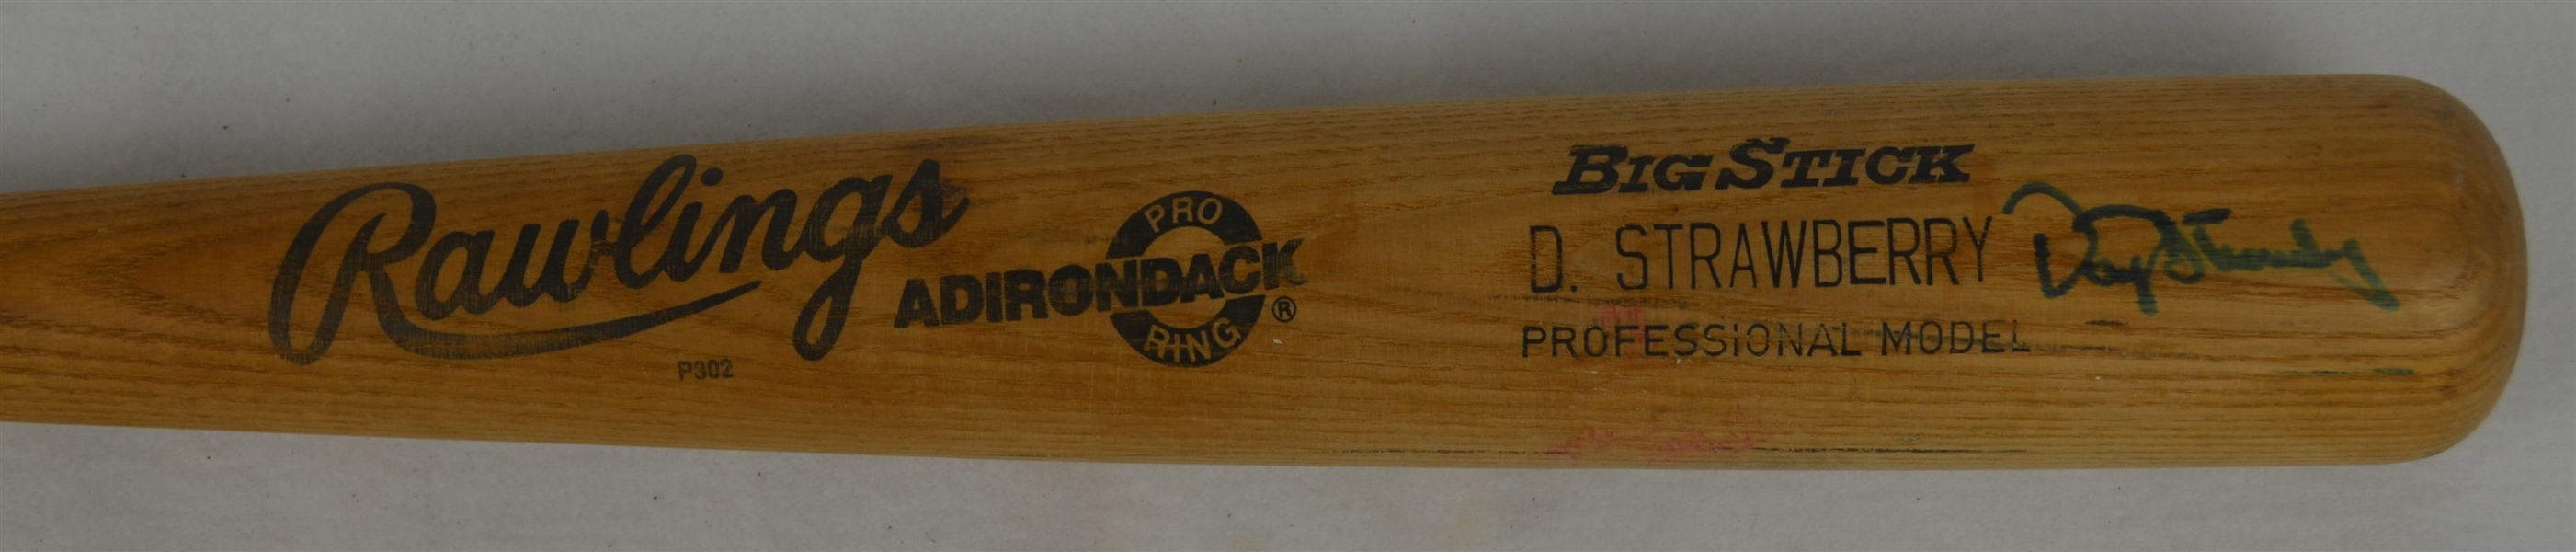 Darryl Strawberry 1986 New York Mets Professional Model Bat w/Heavy Use